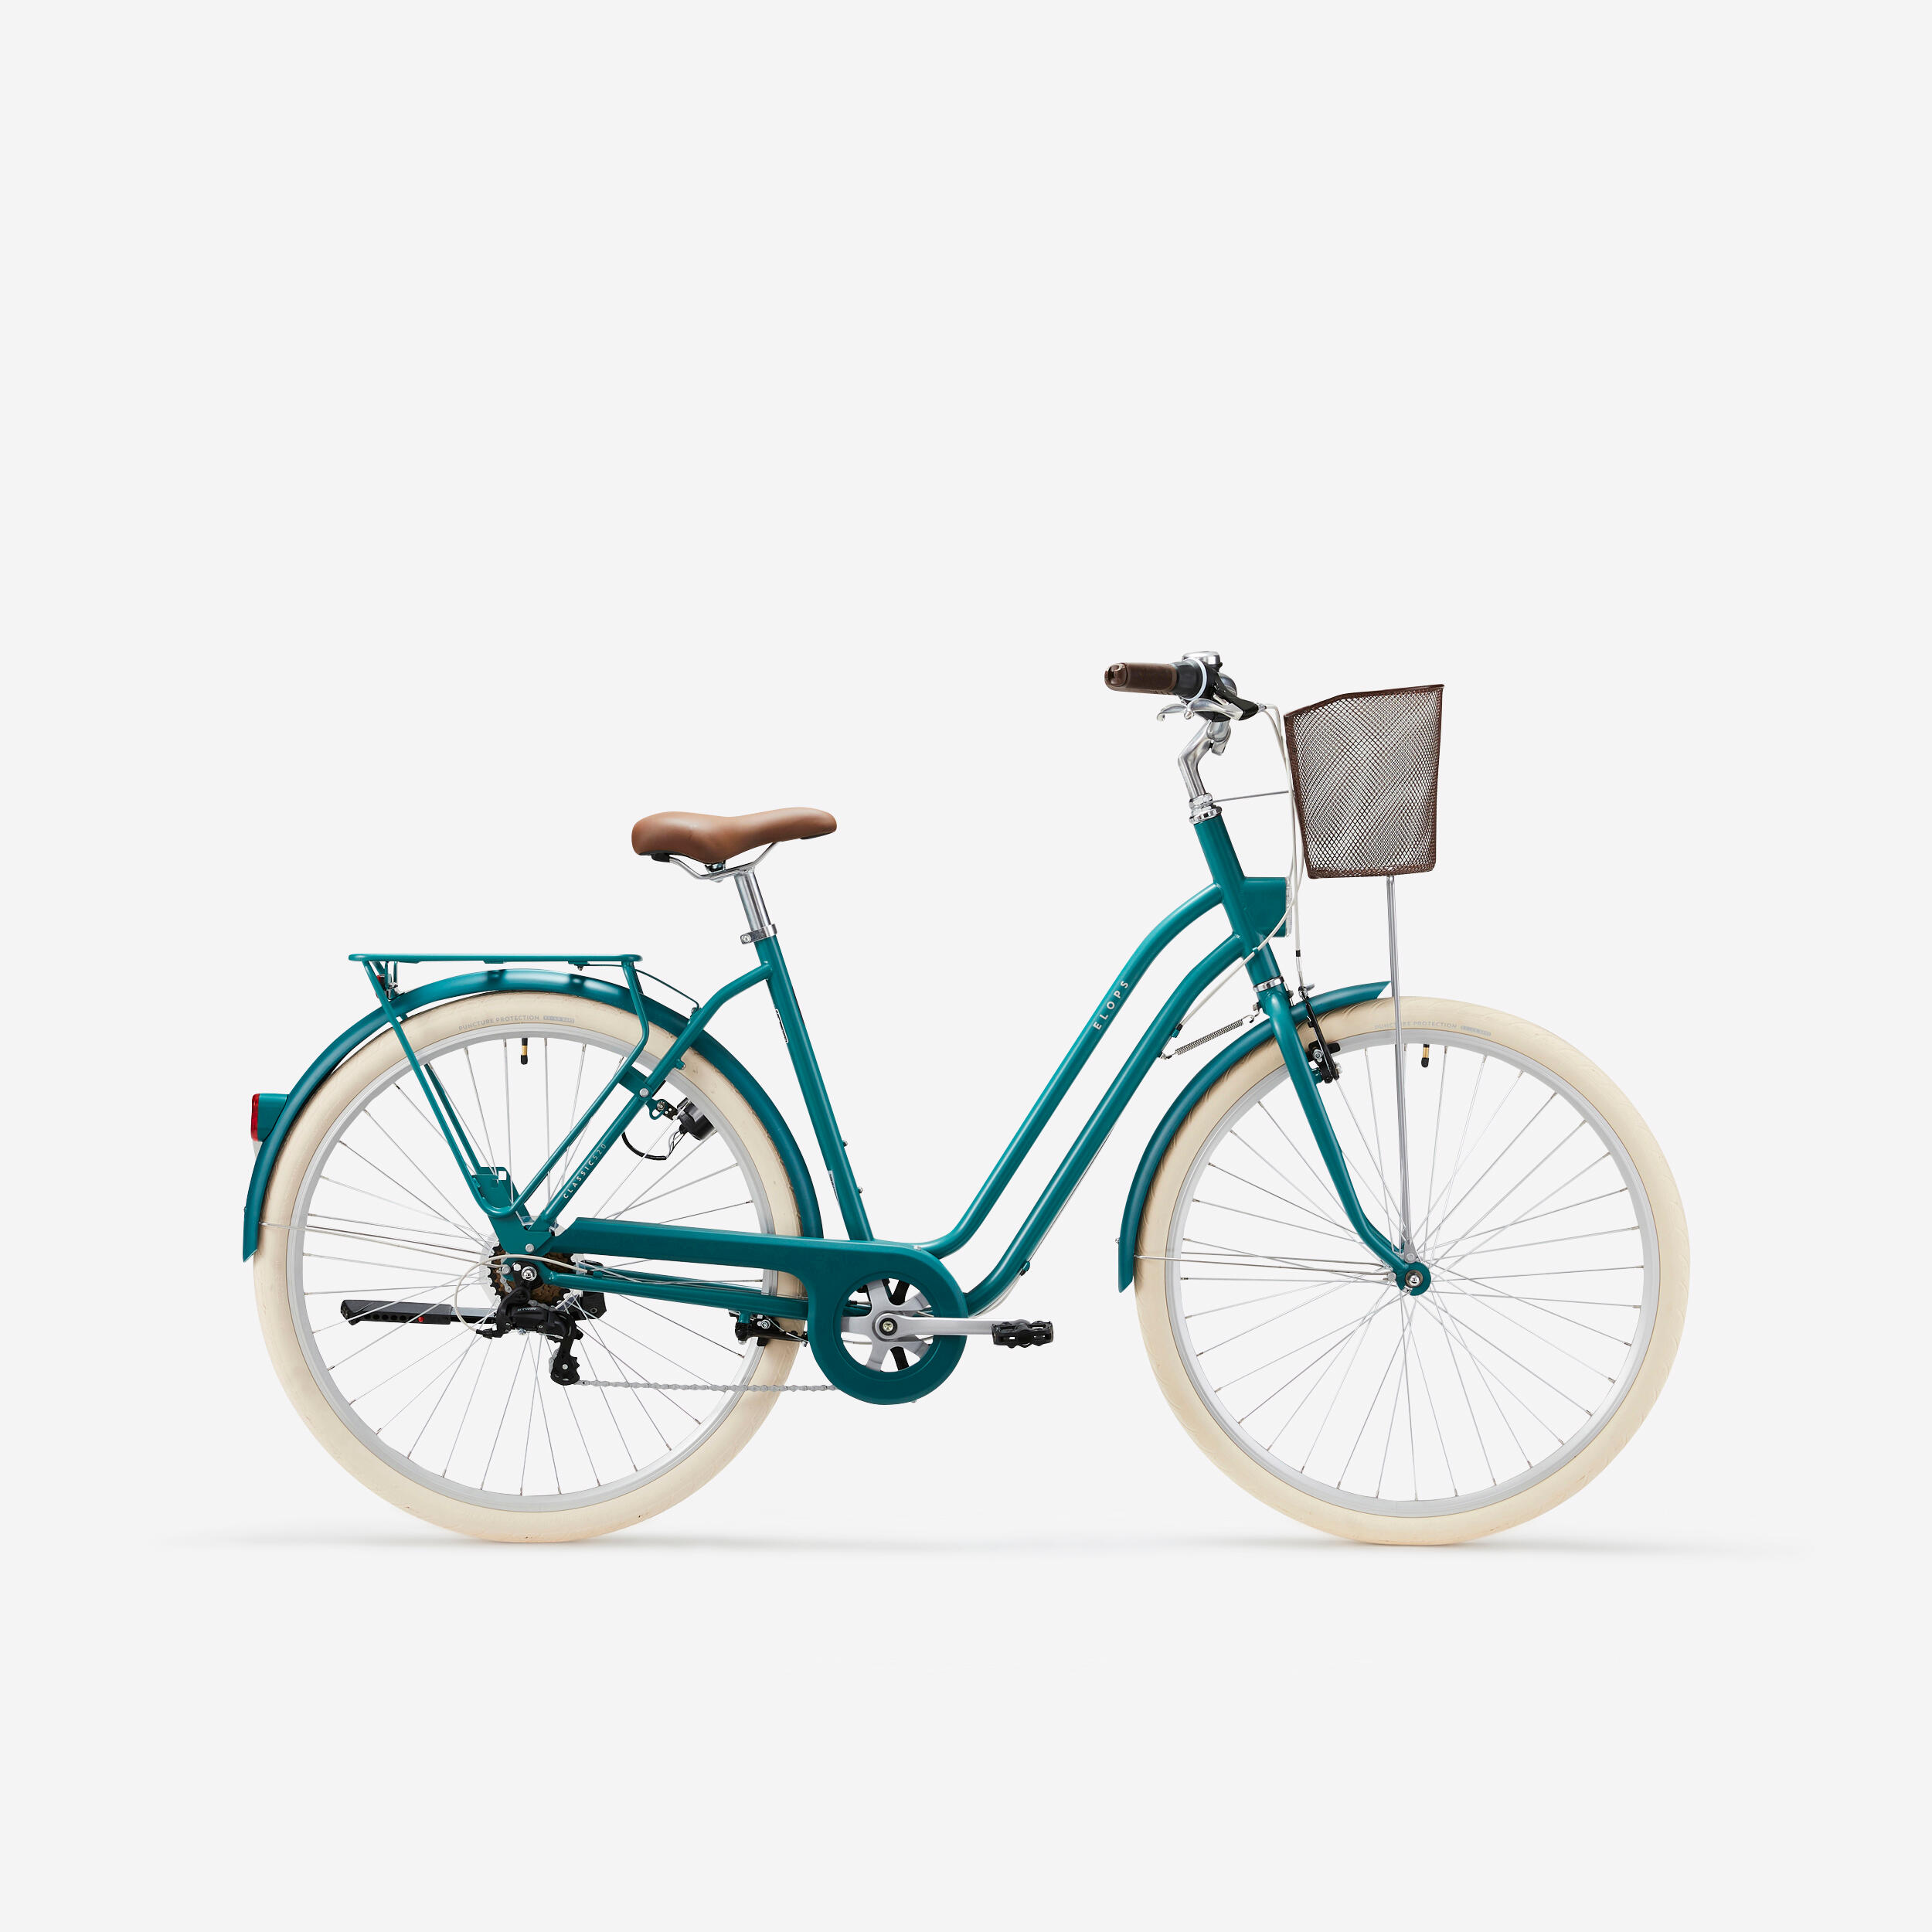 Bicicletă de oraș Elops 520 cadru jos verde